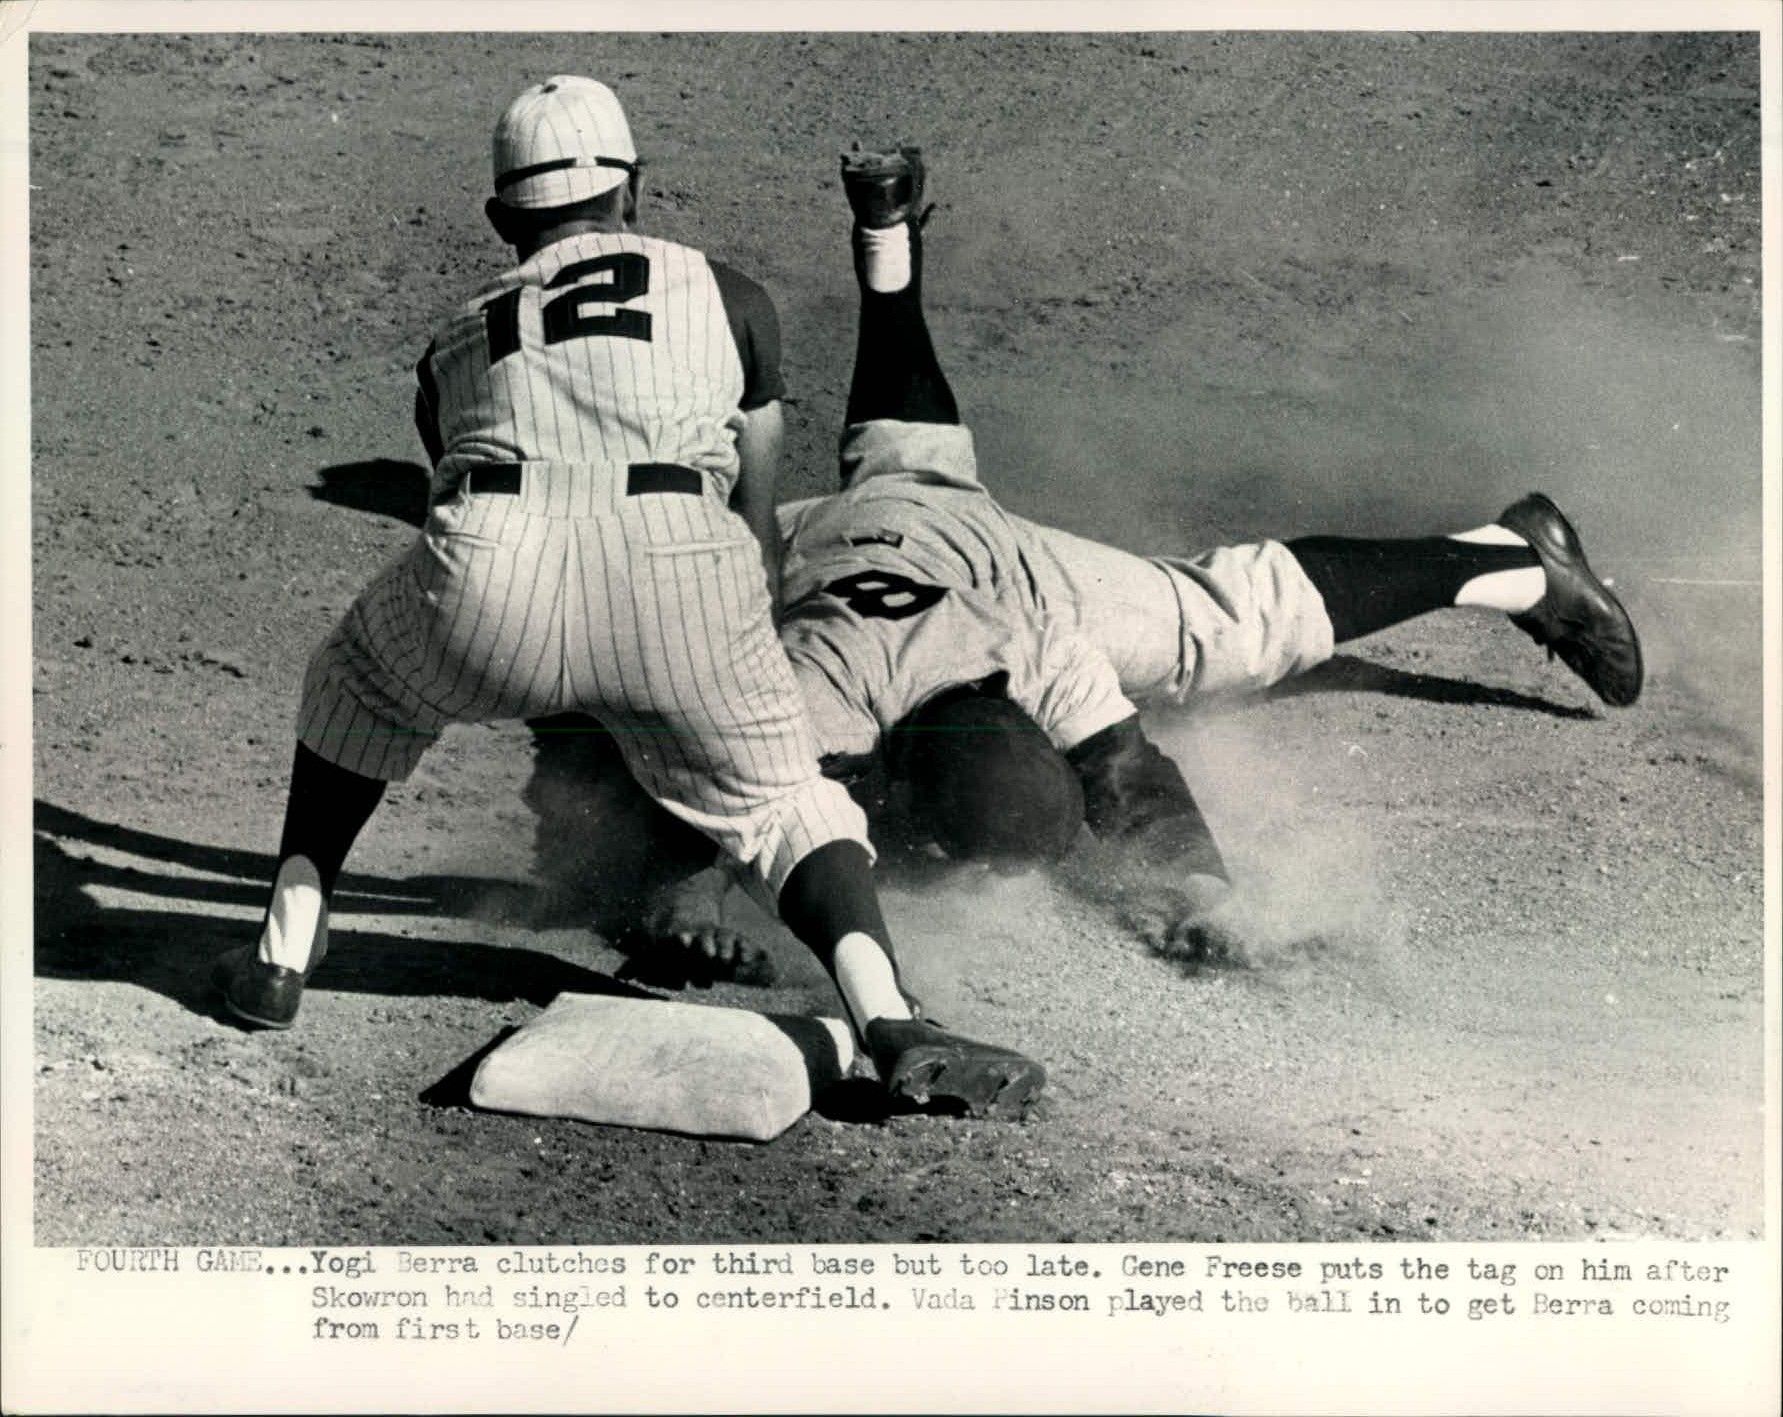 New York Yankees defeat Cincinnati Reds in 1961 World Series 